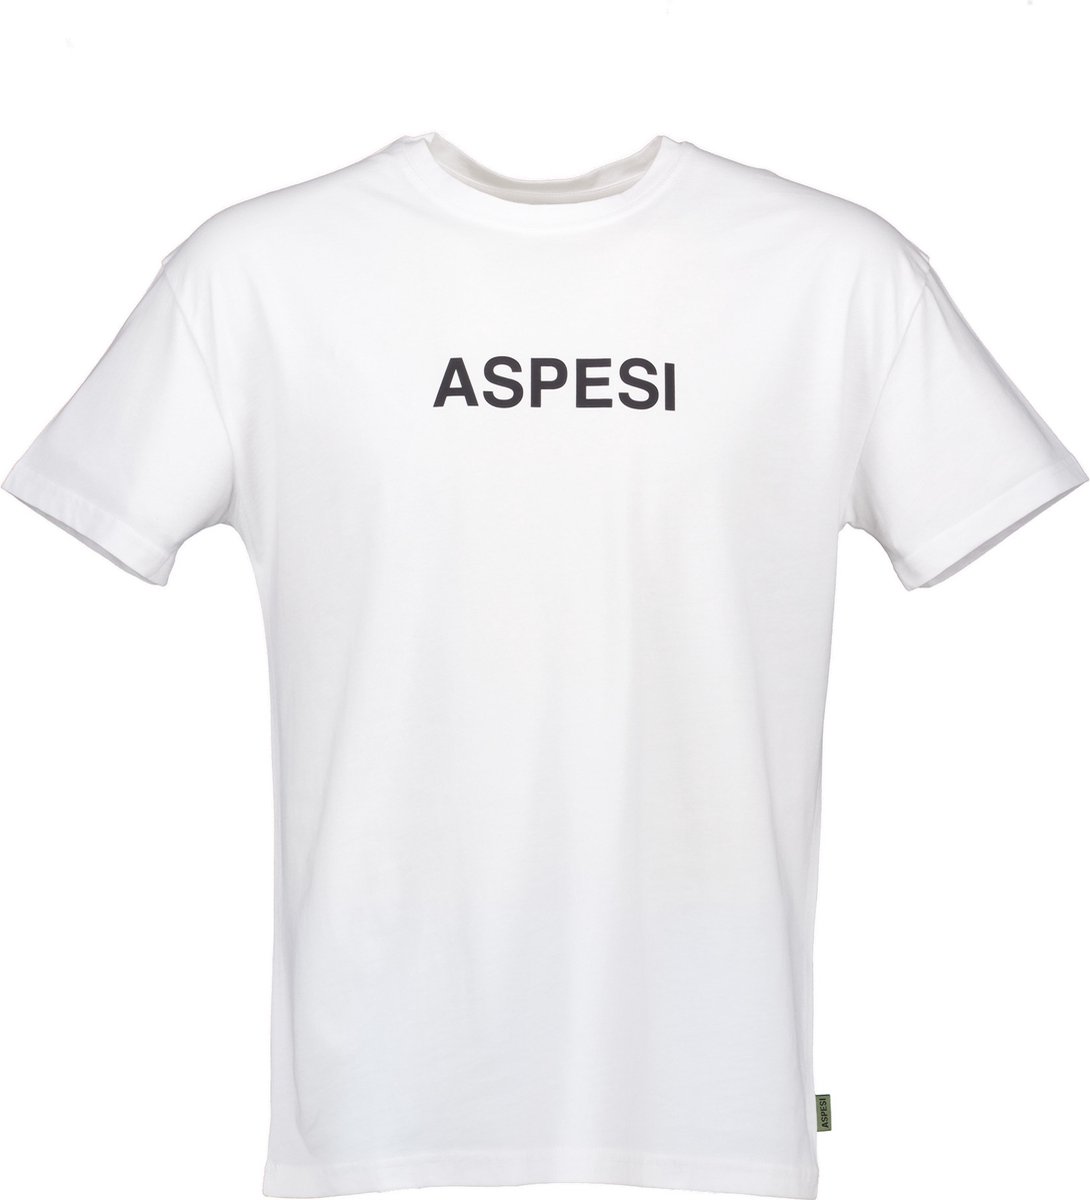 Aspesi Shirt Wit Katoen maat XL Basic t-shirts wit